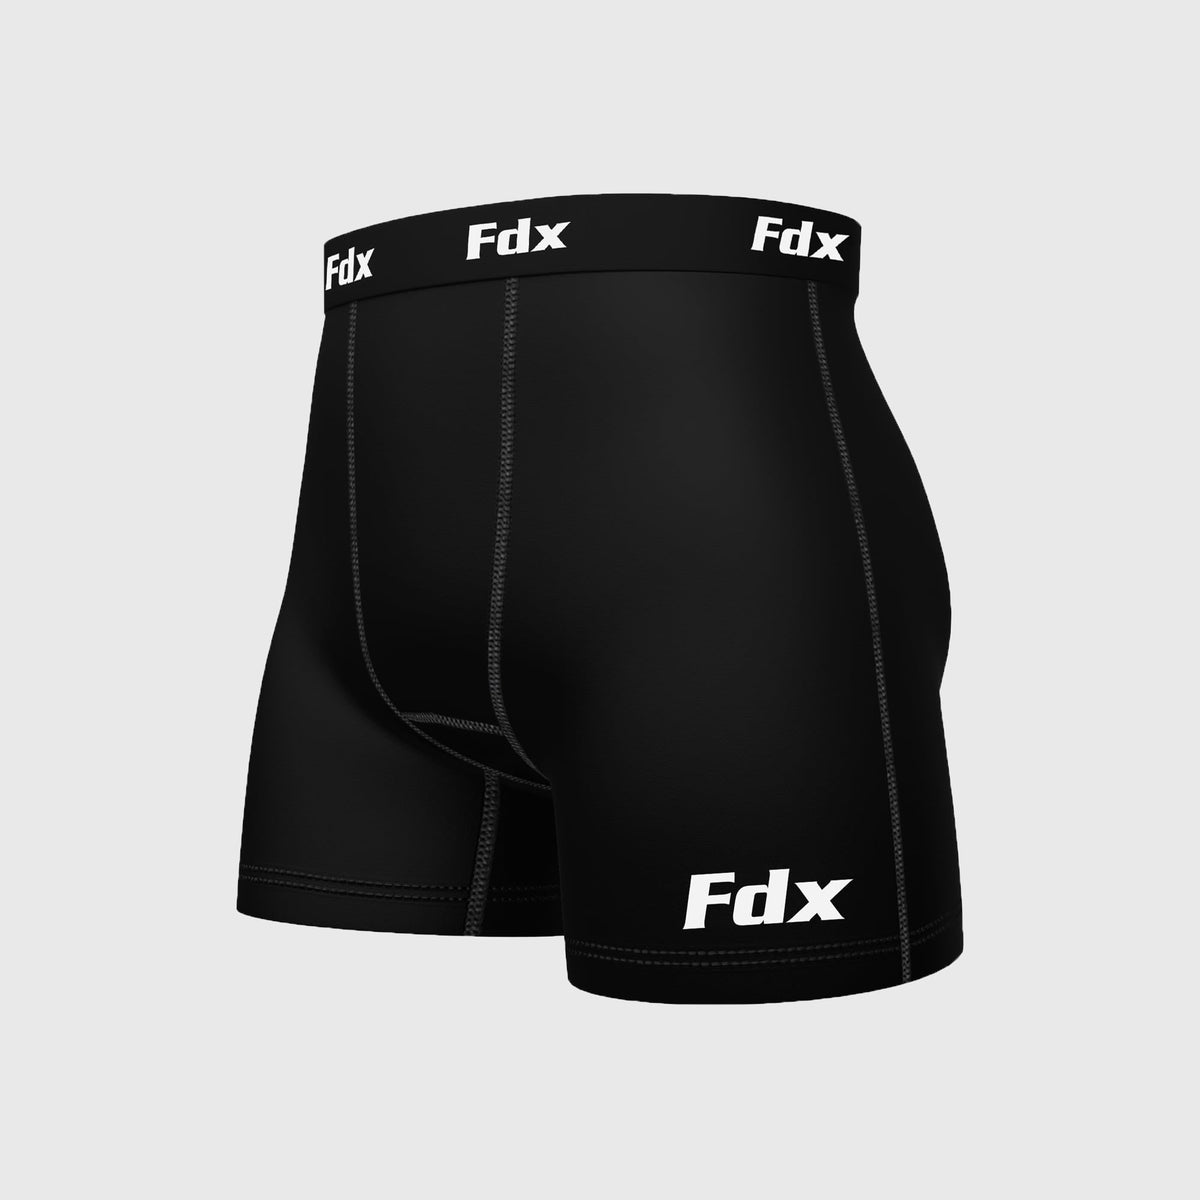 Fdx IT Men's Skin Fit Compression Boxer Shorts Black